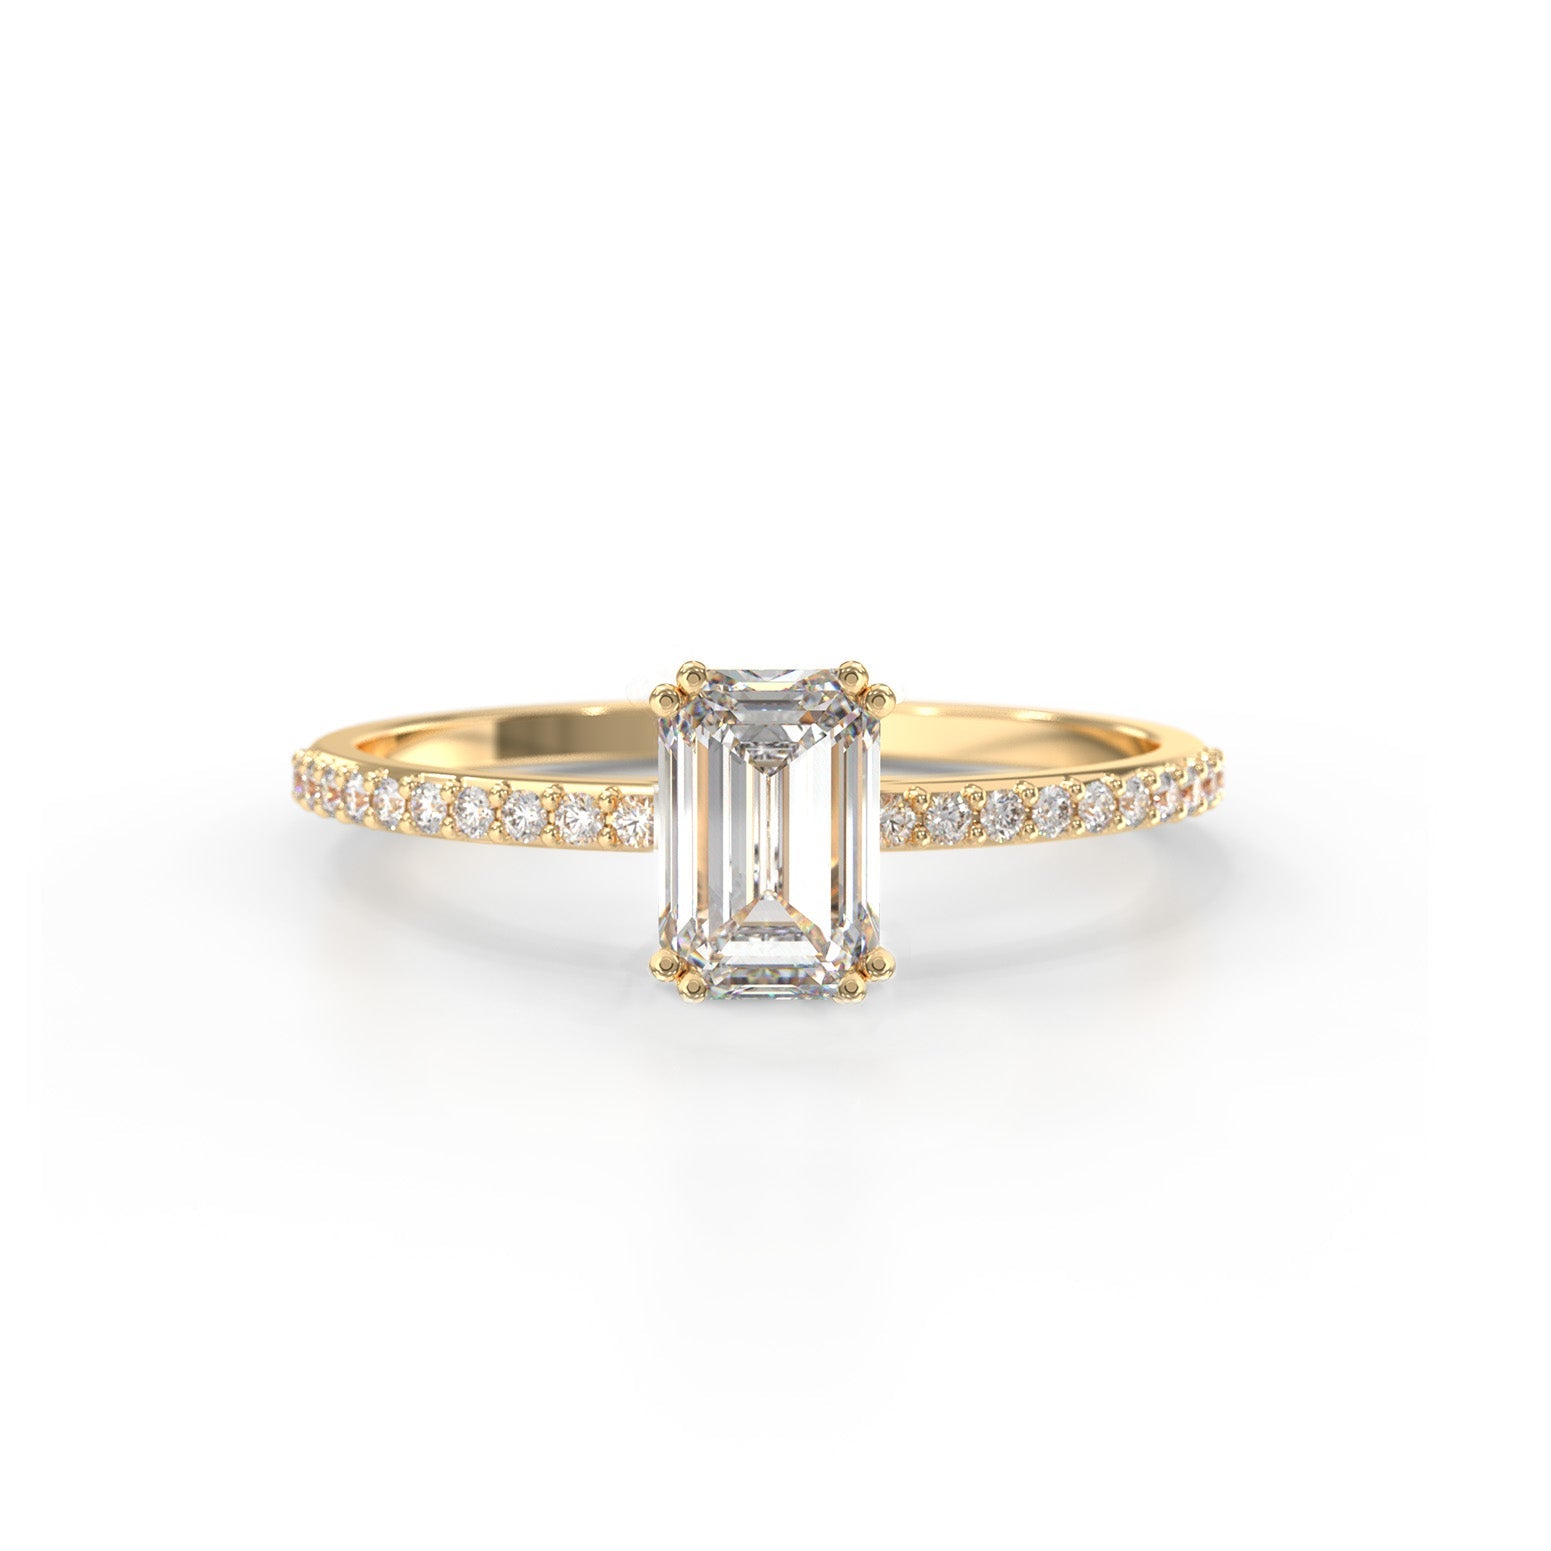 Diamond Maia Frost Ring - Lelya - bespoke engagement and wedding rings made in Scotland, UK